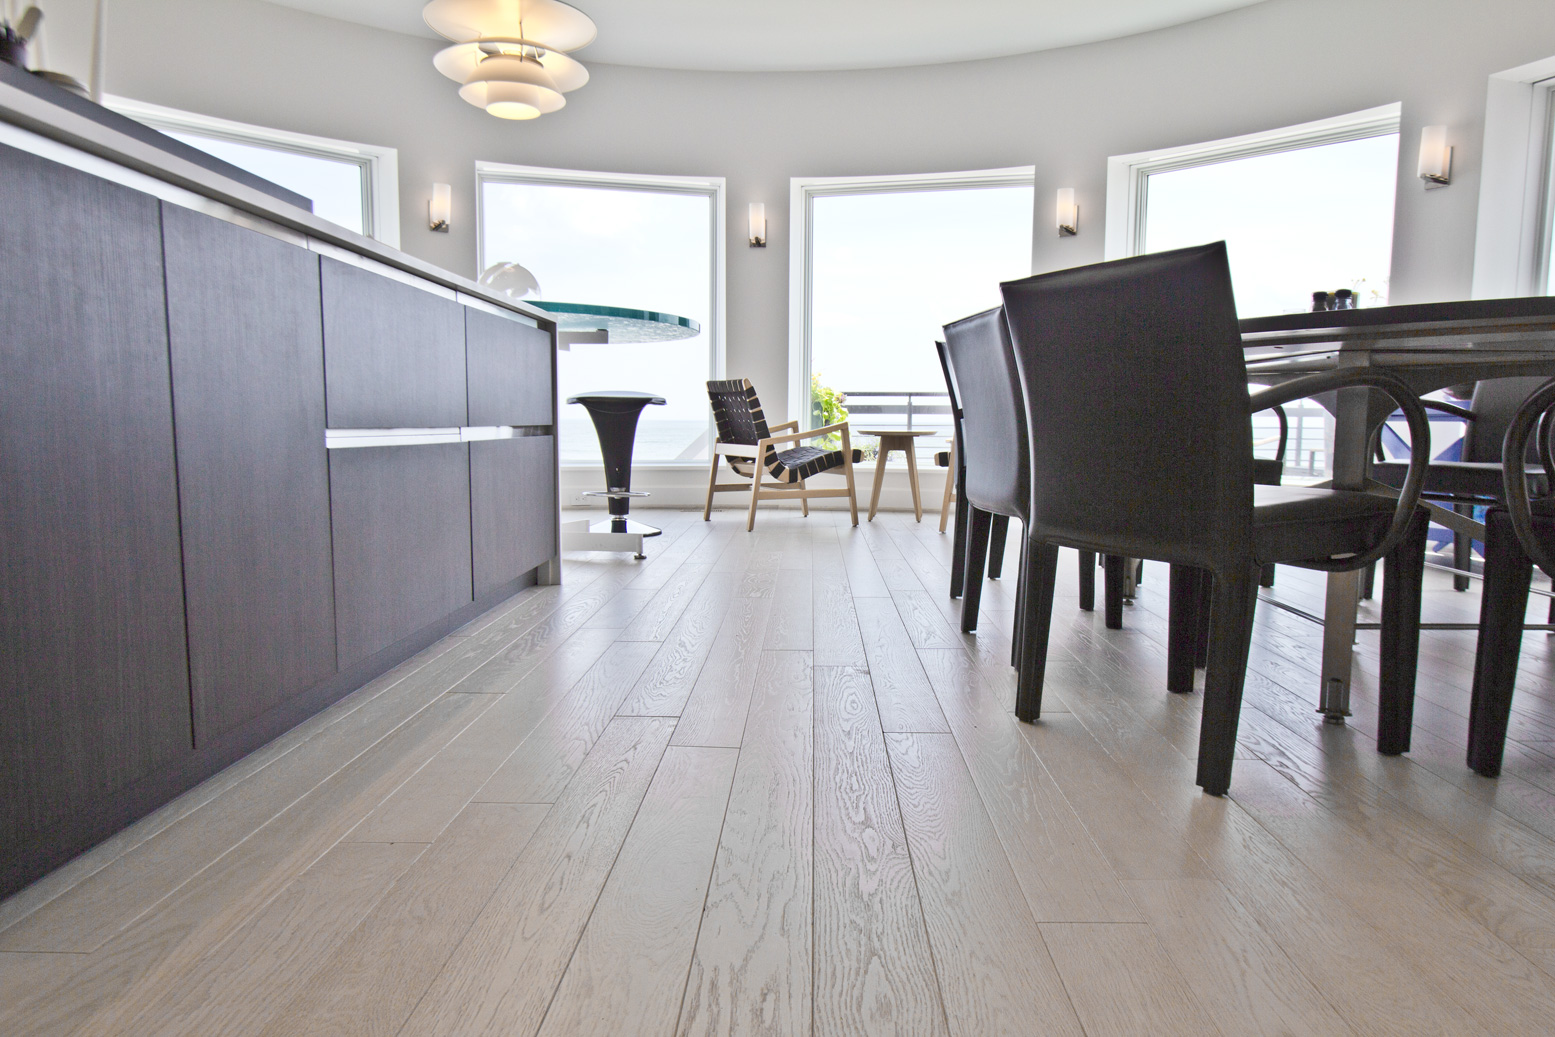 North American White Oak flooring